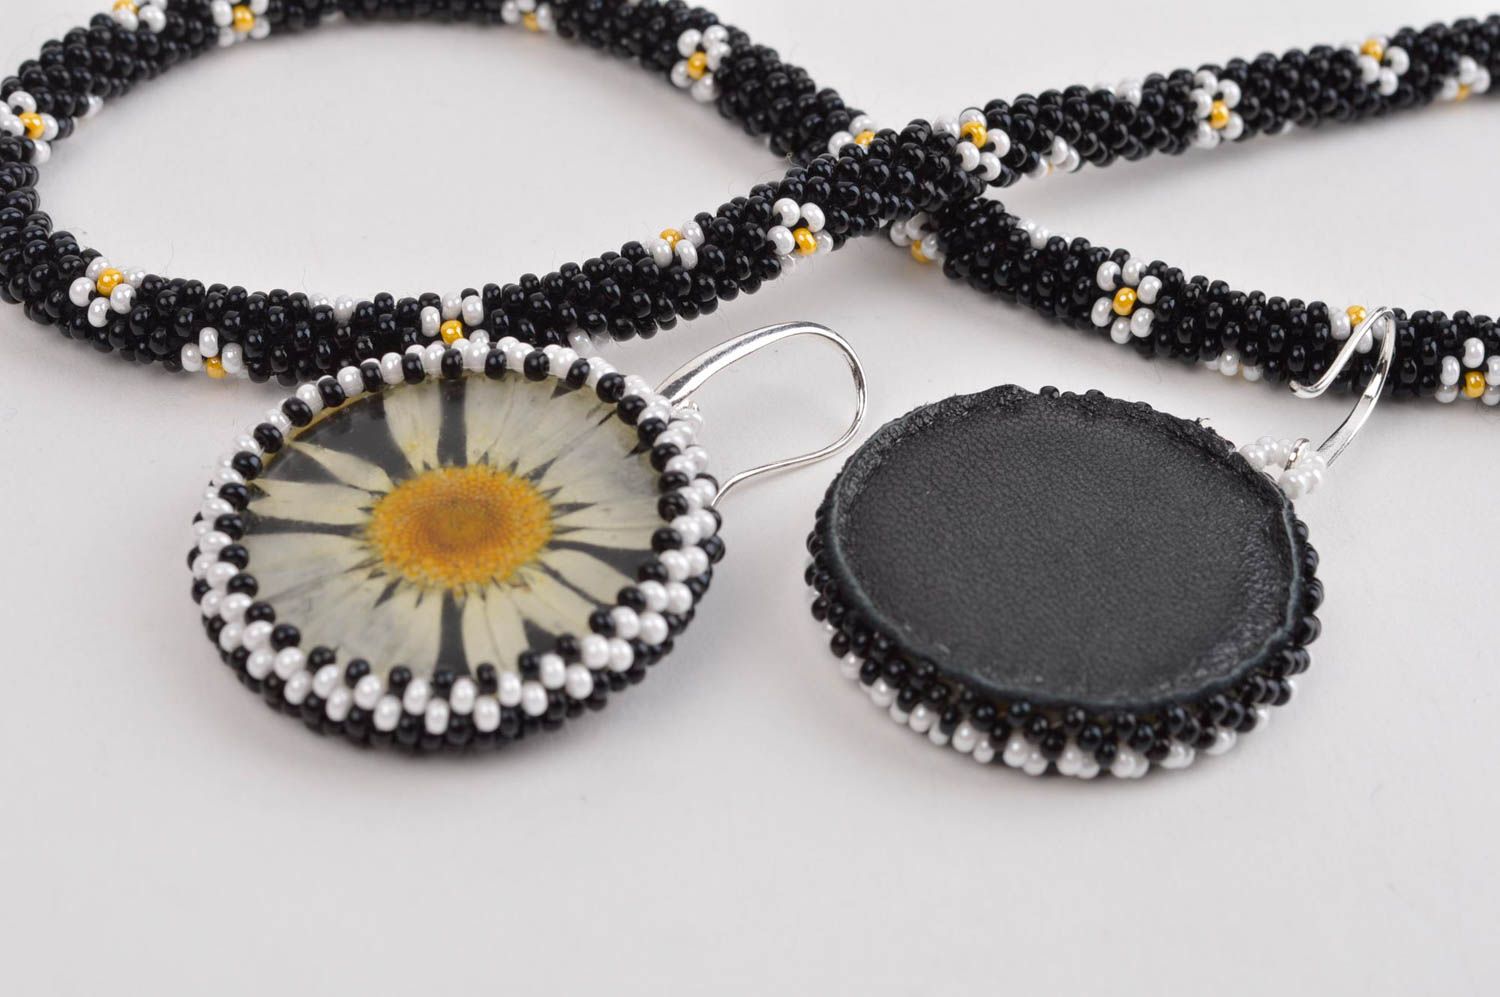 Handmade earrings designer jewelry gift ideas unusual beaded cord gift for women photo 4